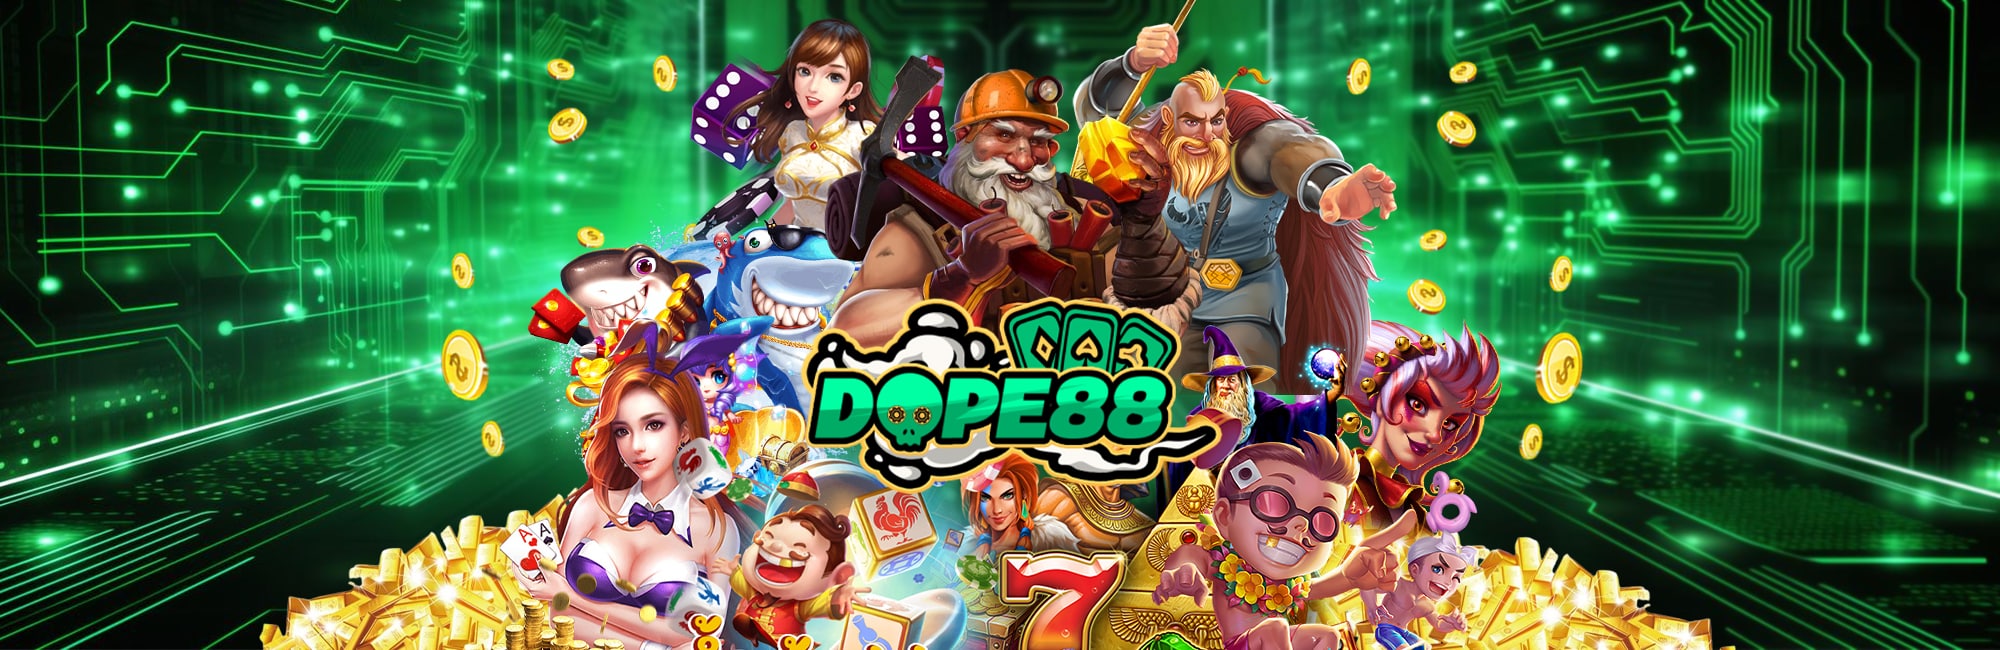 dope88 ทางเลือกสำหรับเดิมพัน เกมพนันออนไลน์ ยอดนิยม